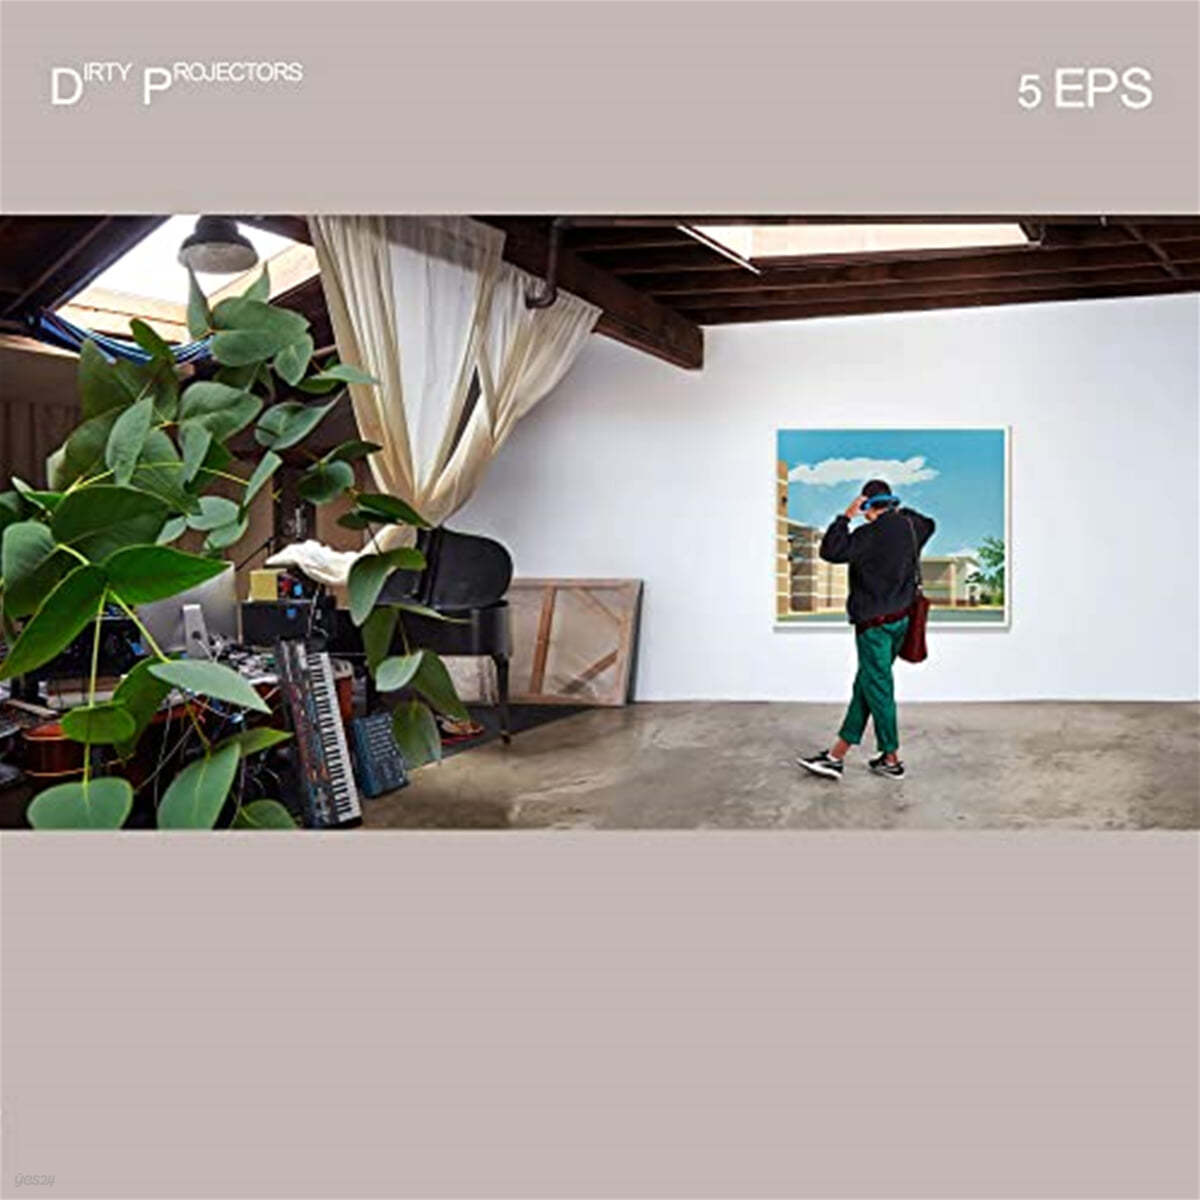 Dirty Projectors (더티 프로젝터스) - 5EPS 